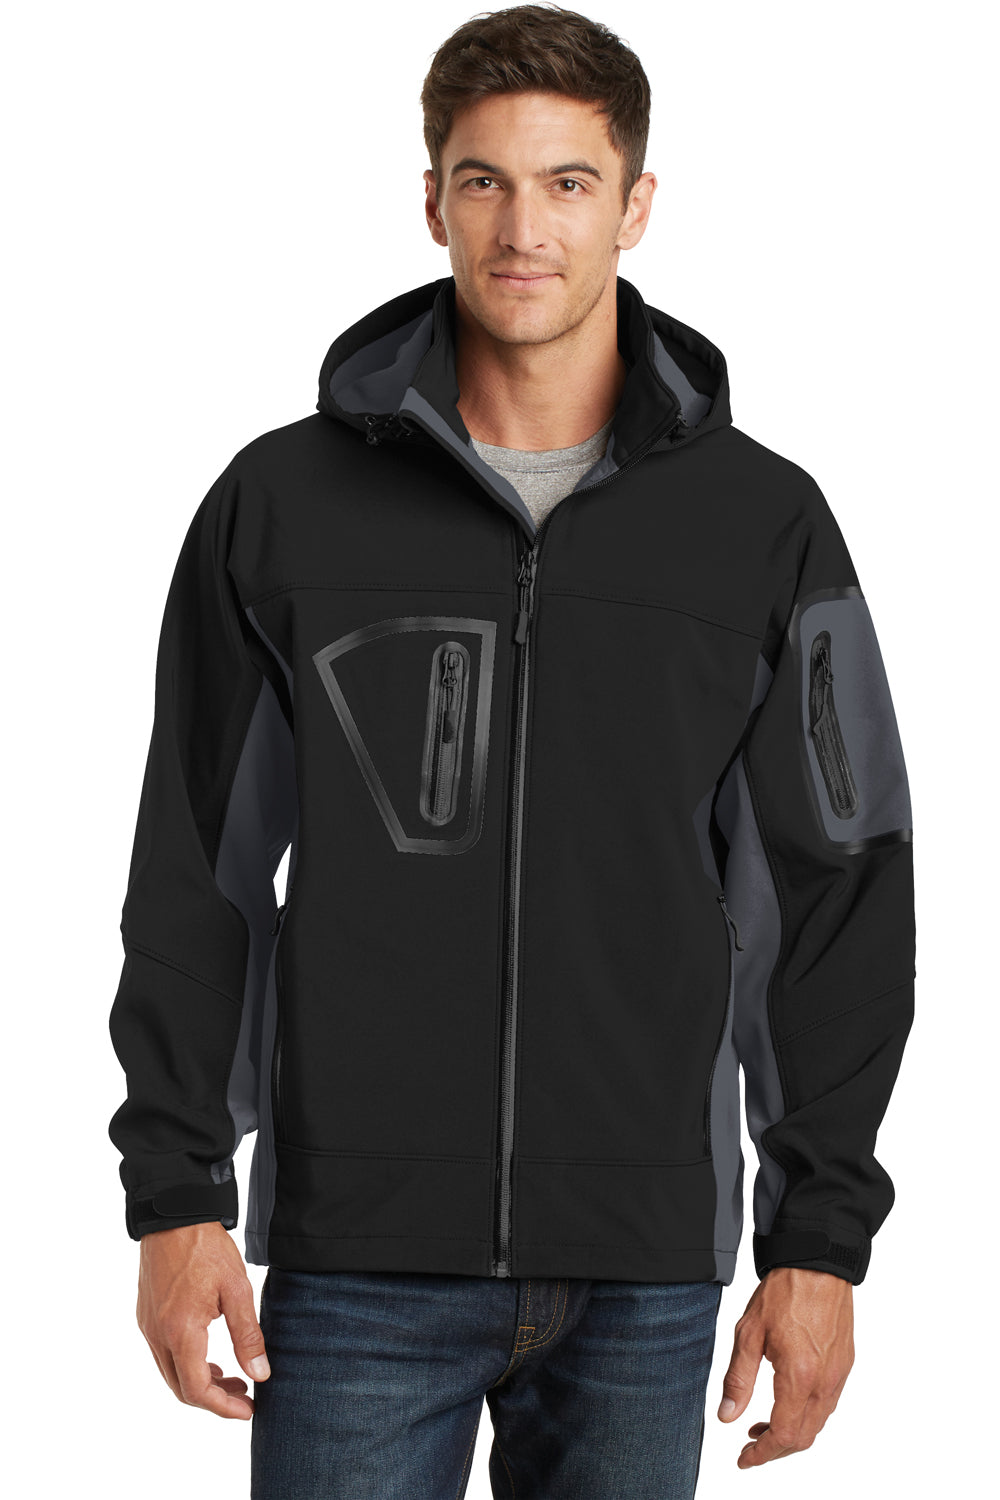 Port Authority J798 Mens Waterproof Full Zip Hooded Jacket Black/Grey Front